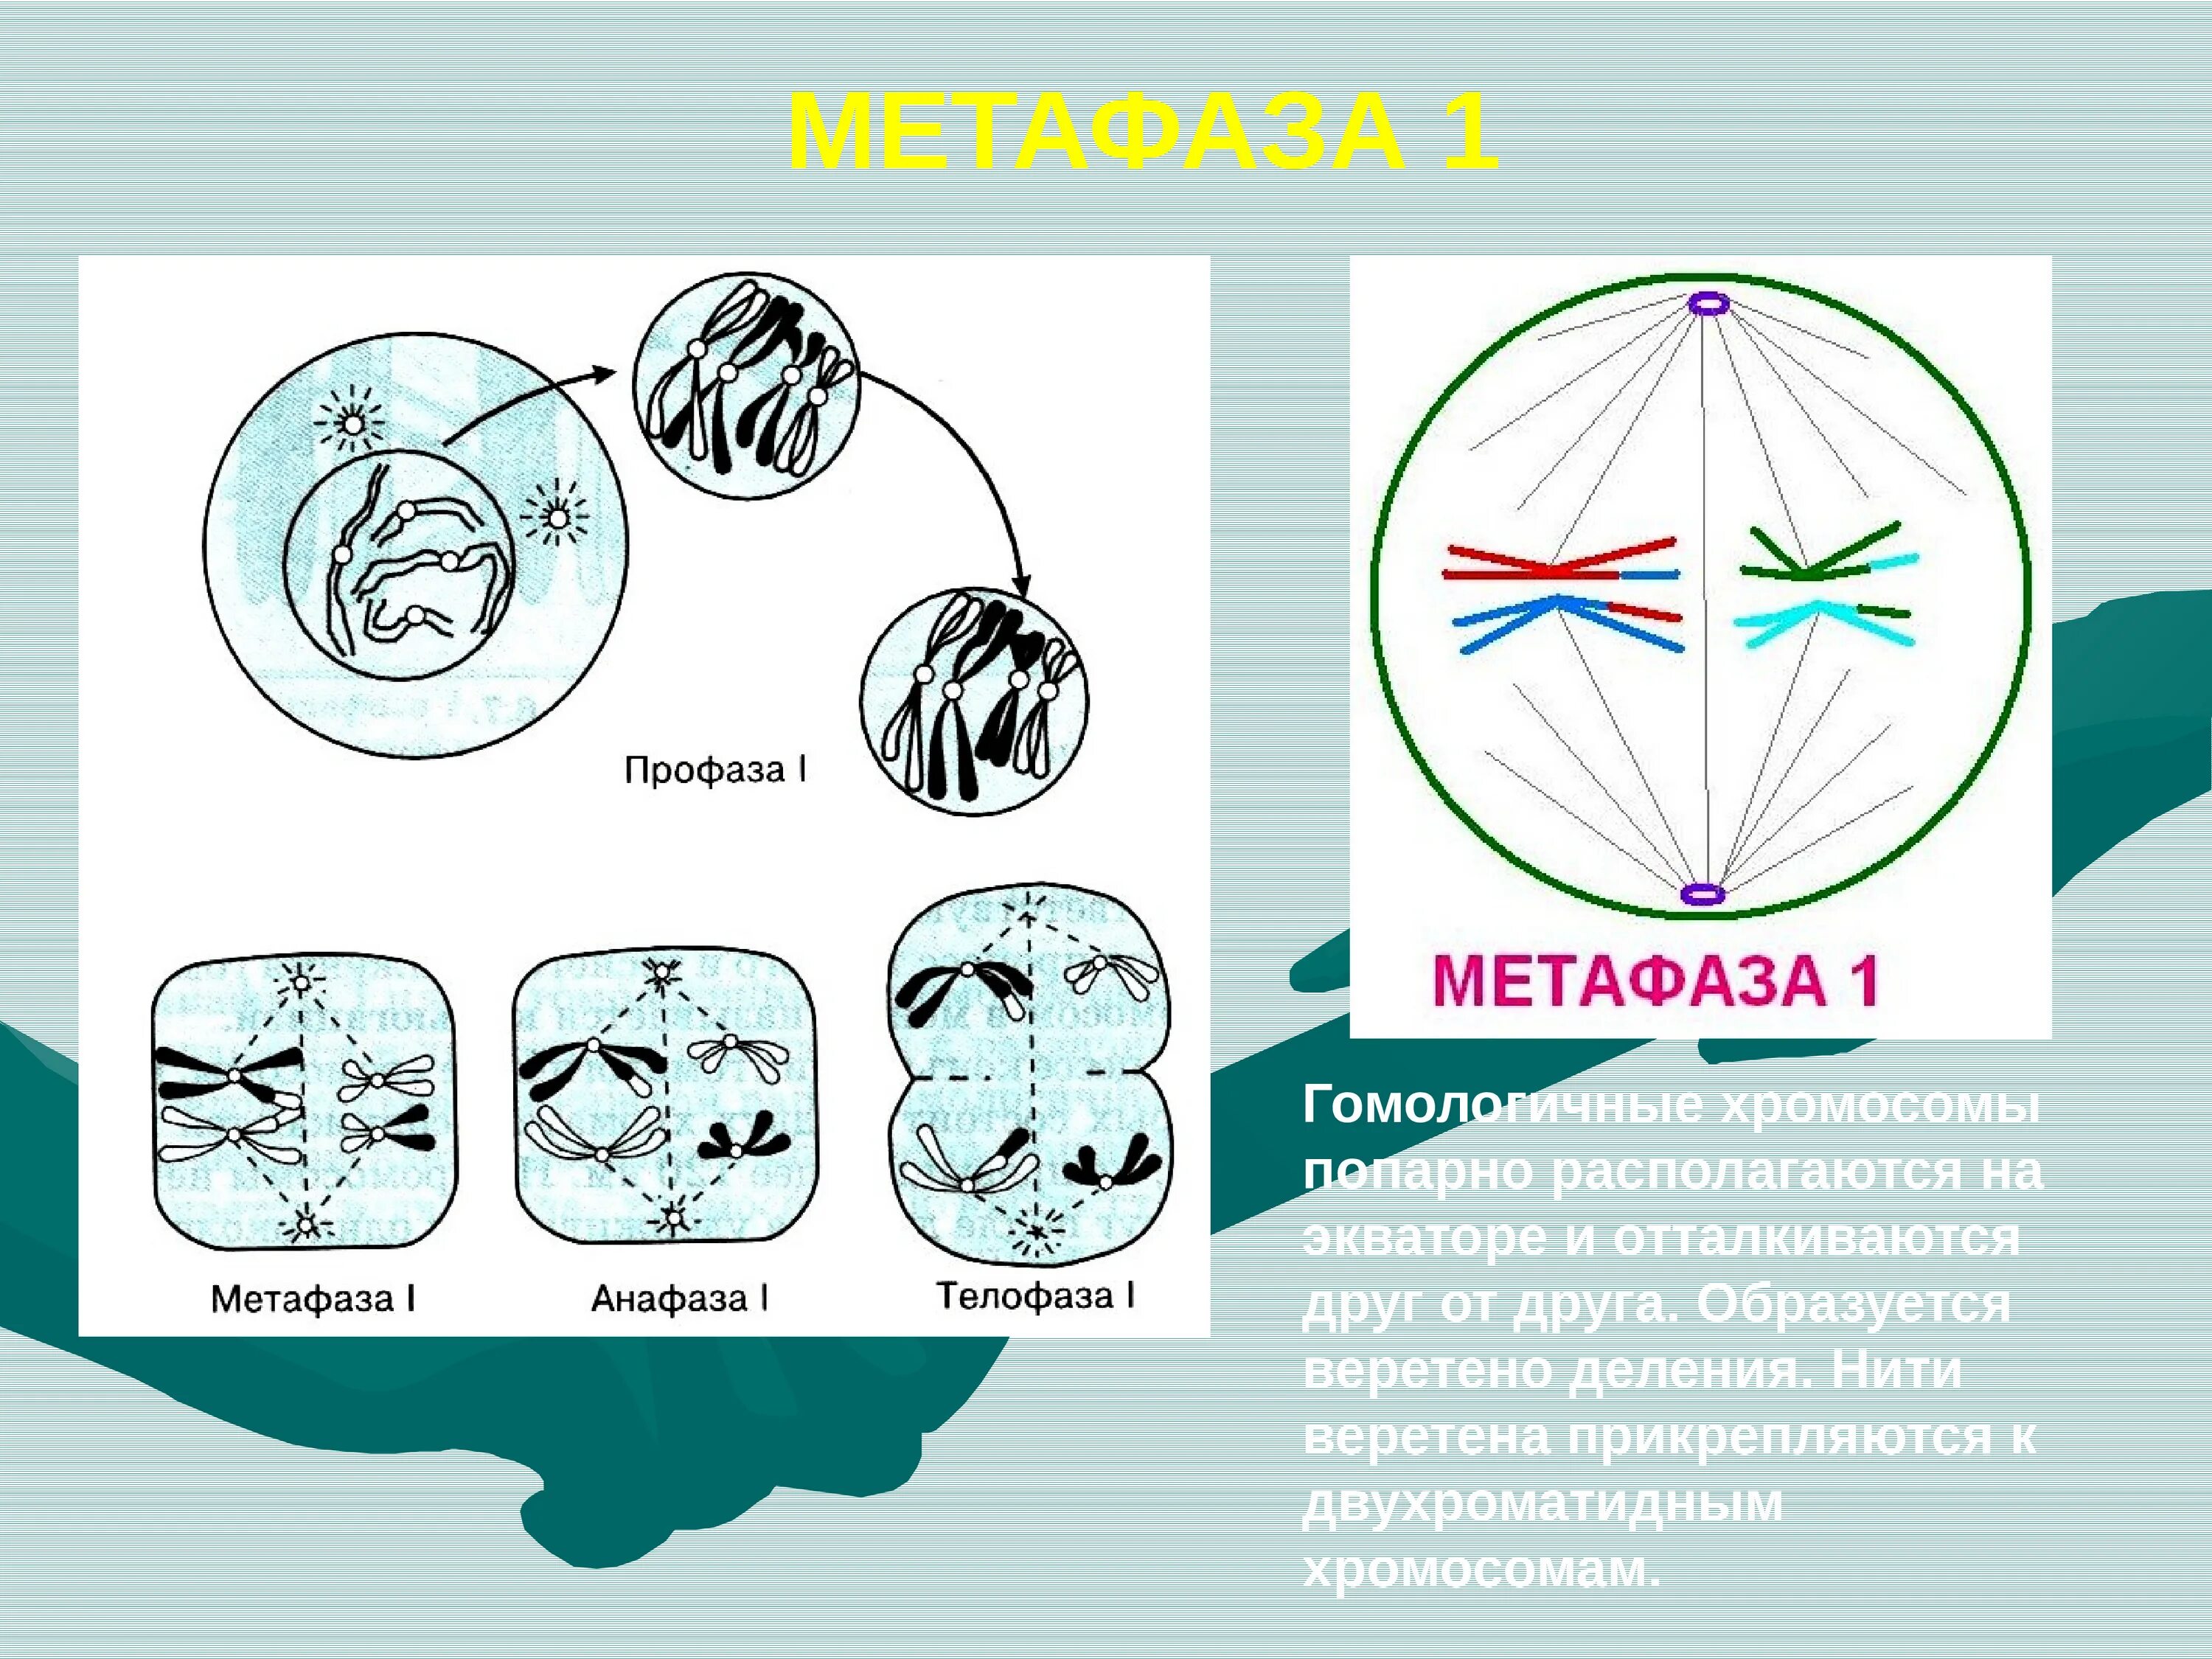 Д спирализация. Метафаза мейоза 2. Метафаза нити веретена деления. Метафаза мейоза 1. Метафаза Веретено деления.